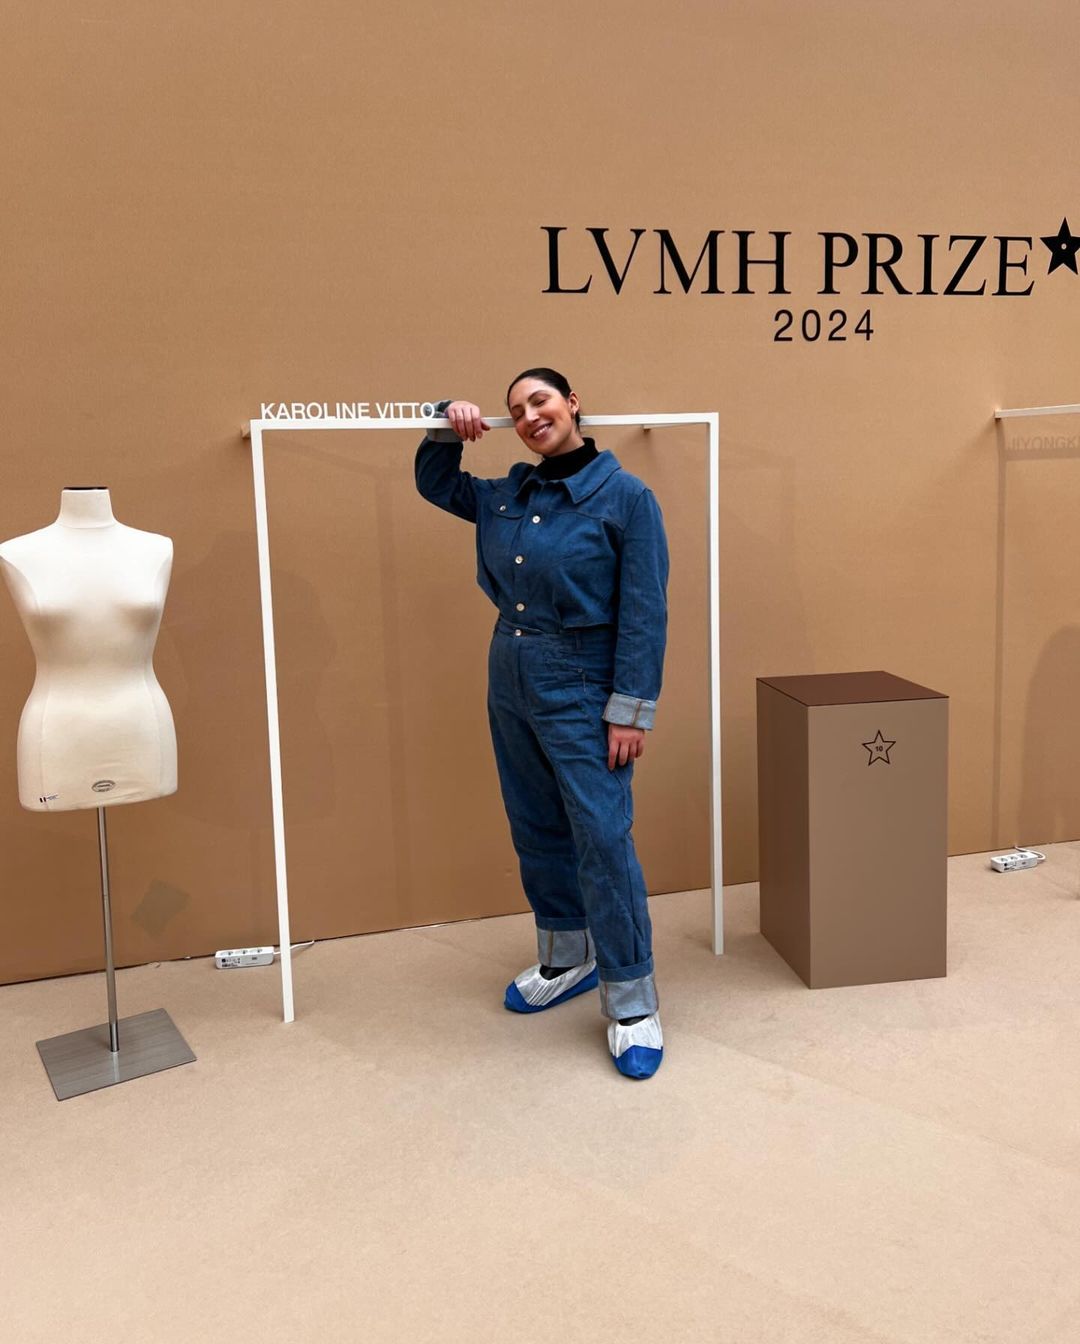 Karoline Vitto é semifinalista do Prêmio LVMH 2024